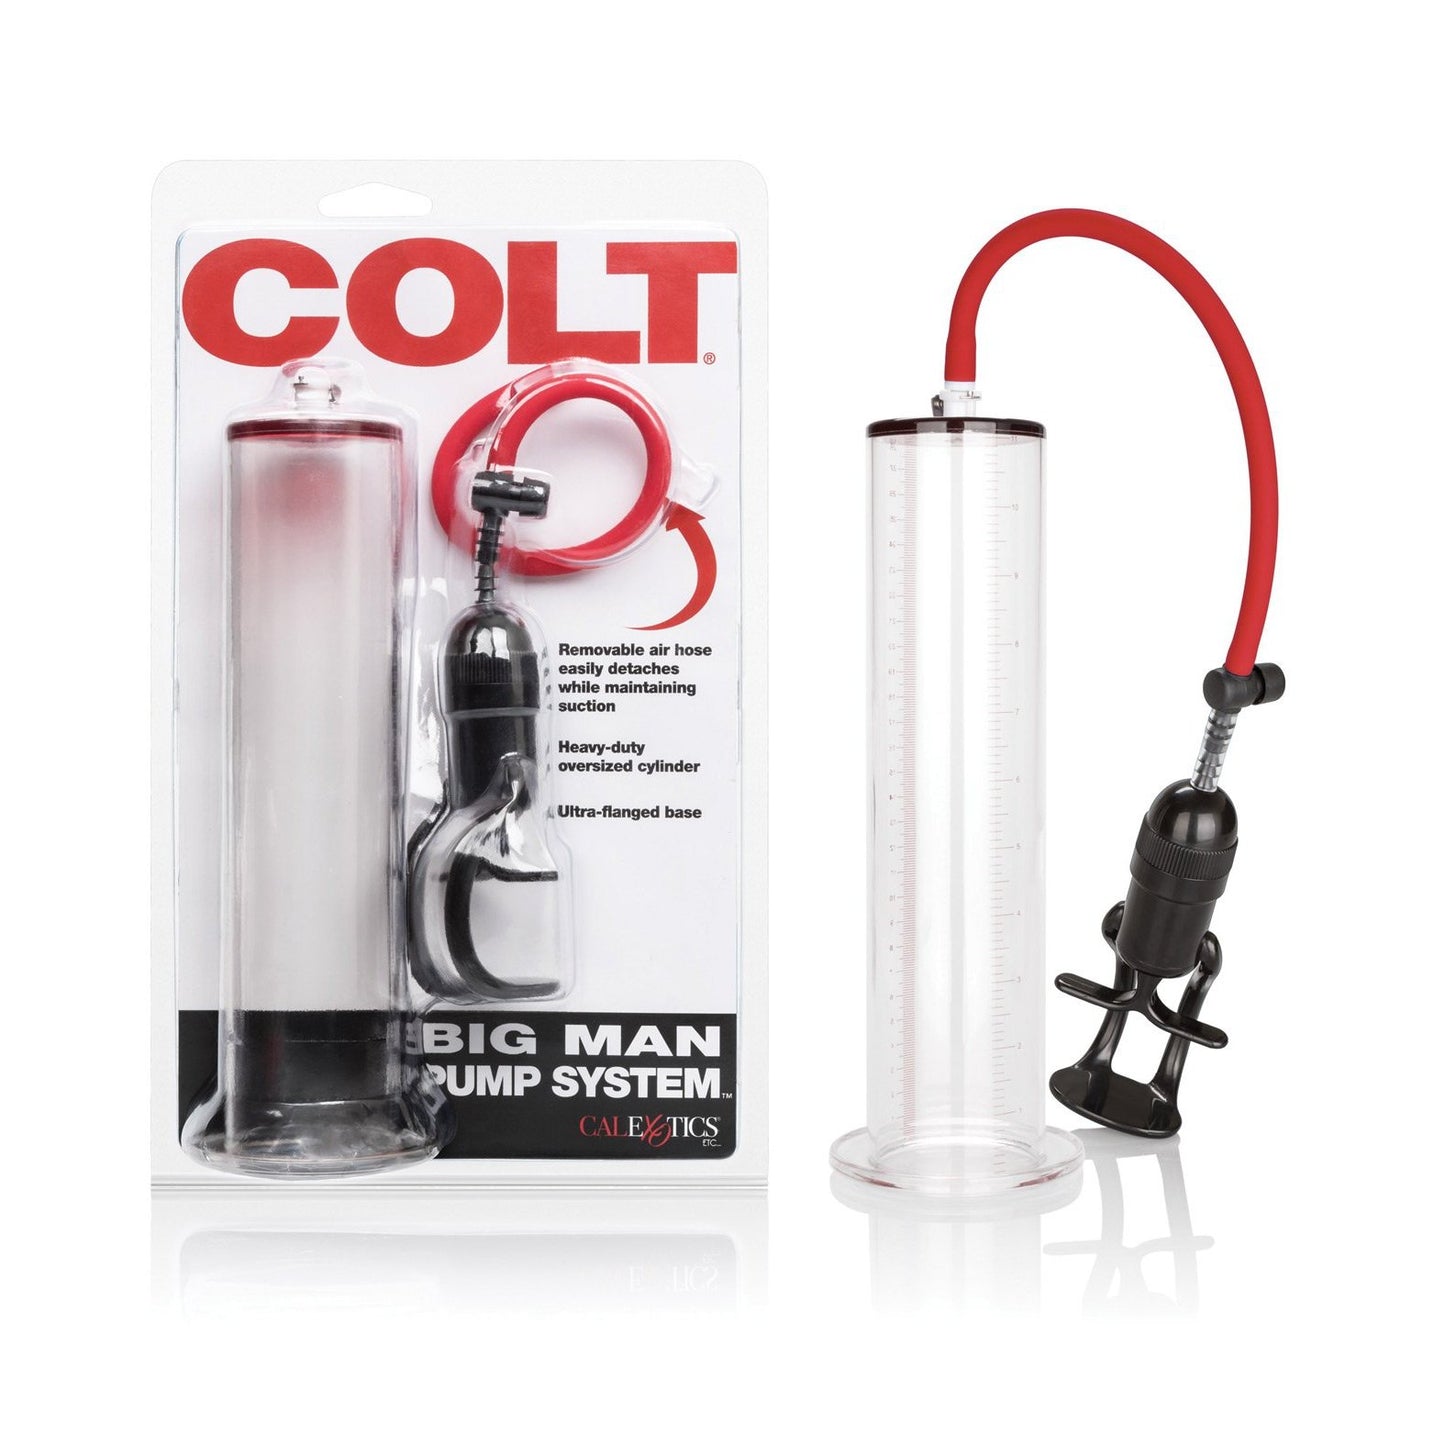 Colt Big Man Penis Pump System